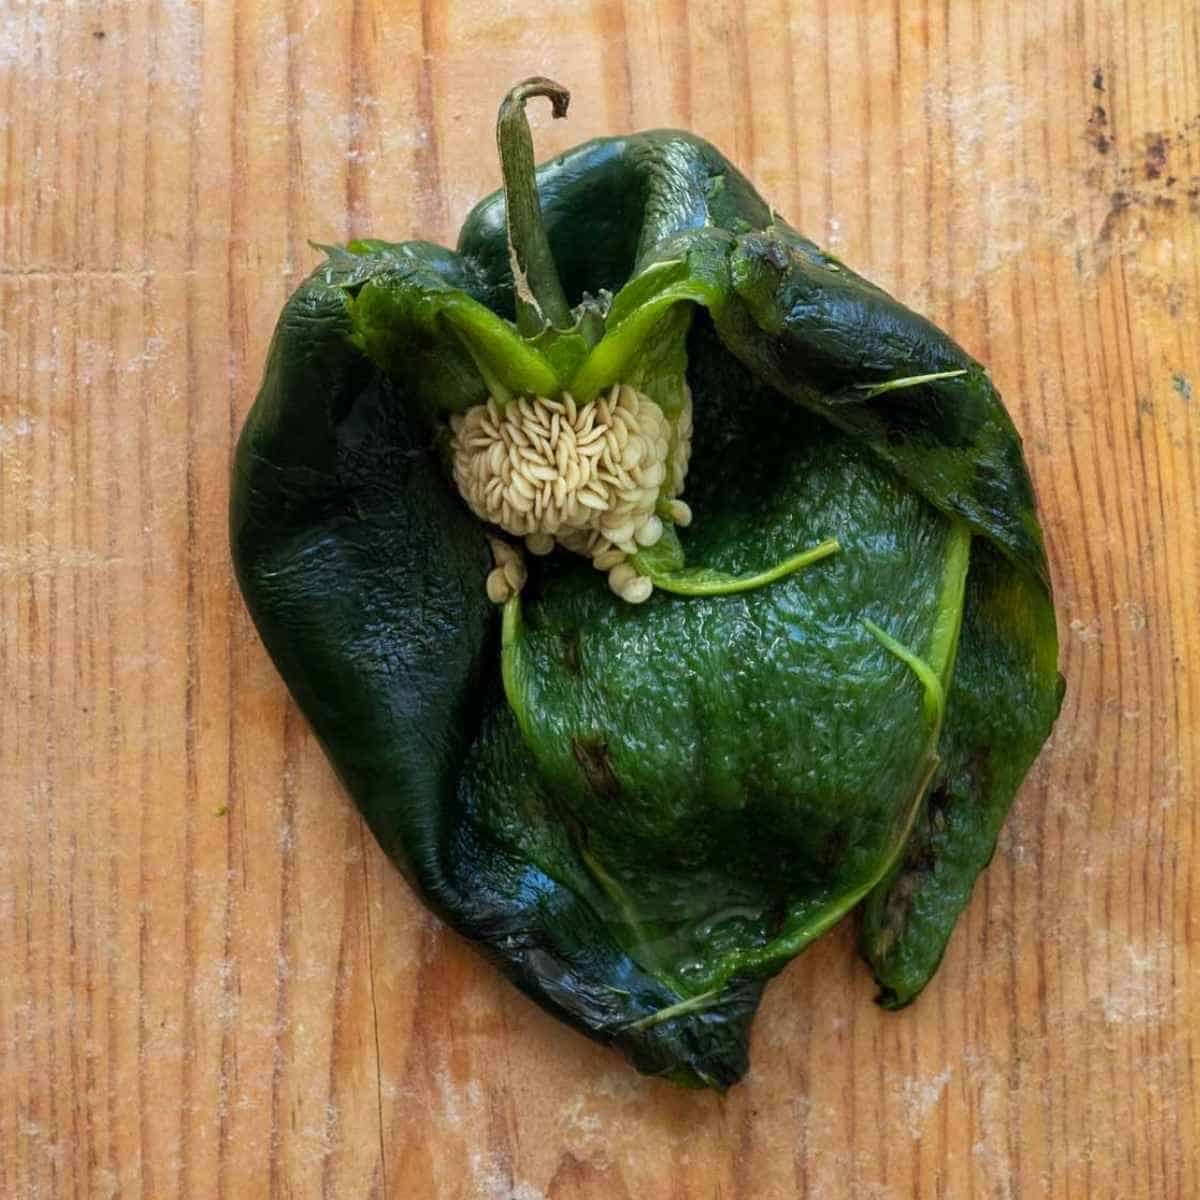 Poblano pepper sliced in half exposing seeds.